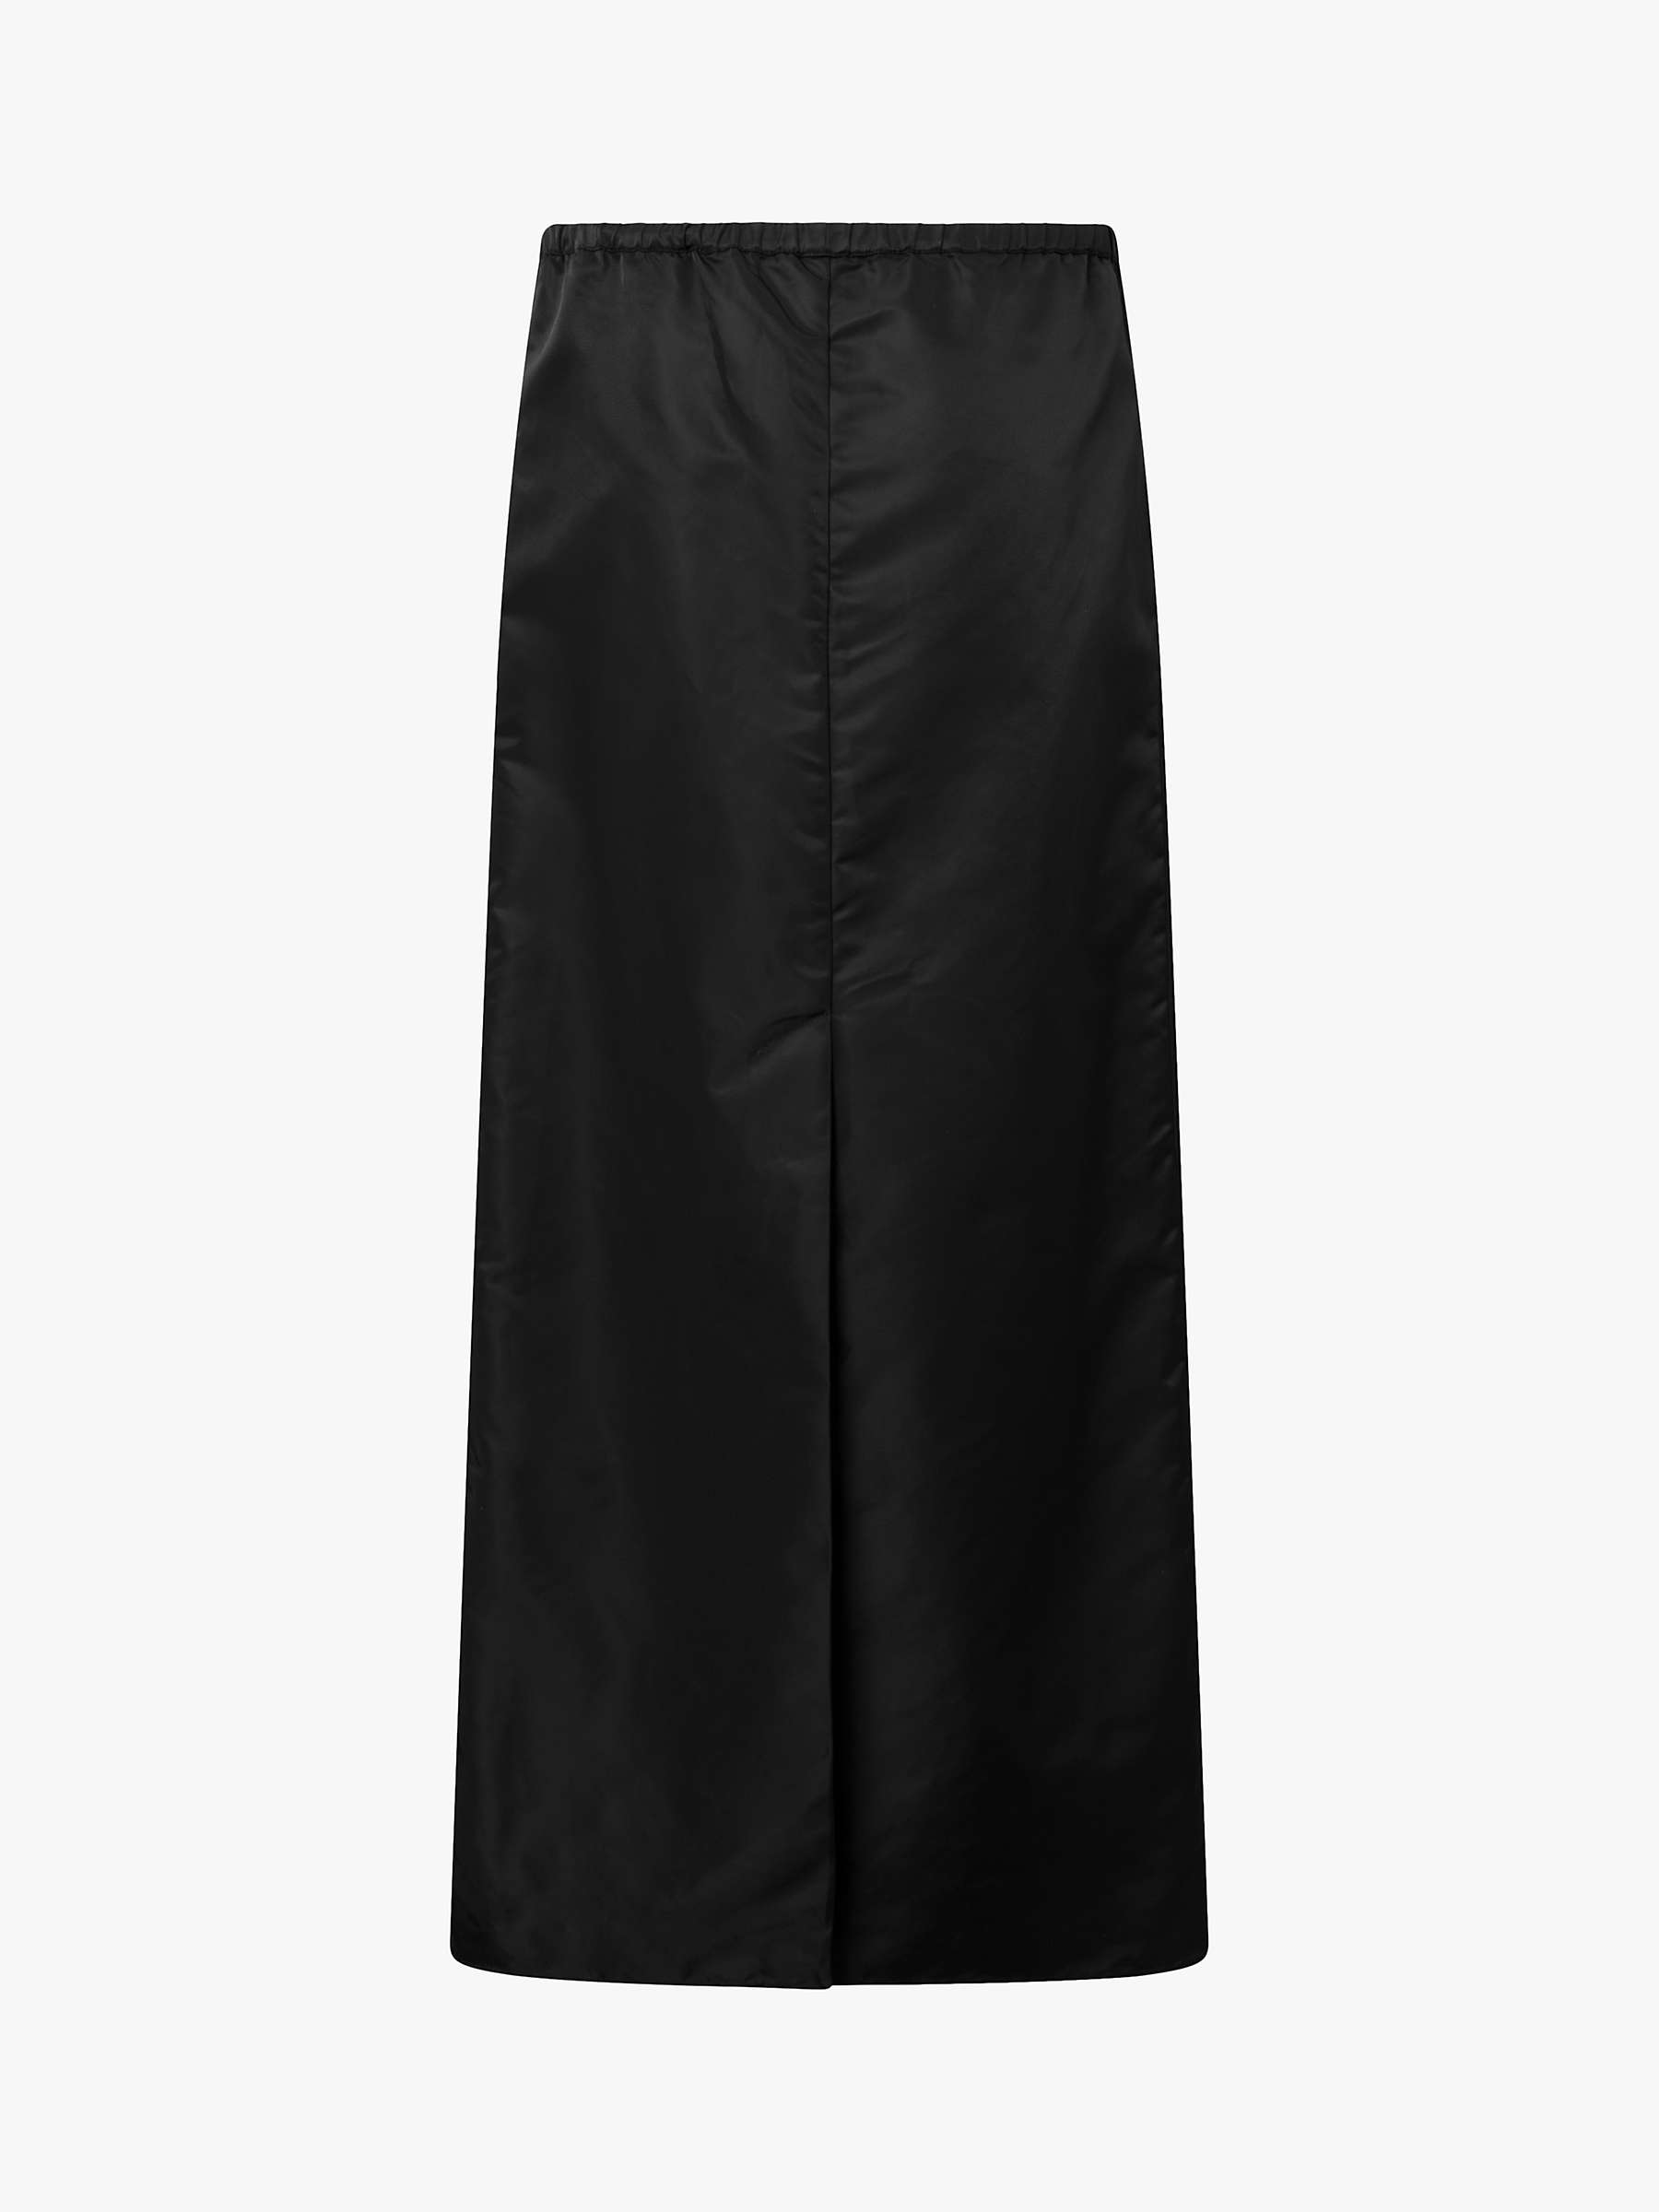 Buy Lovechild 1979 Ramona Maxi Skirt, Black Online at johnlewis.com